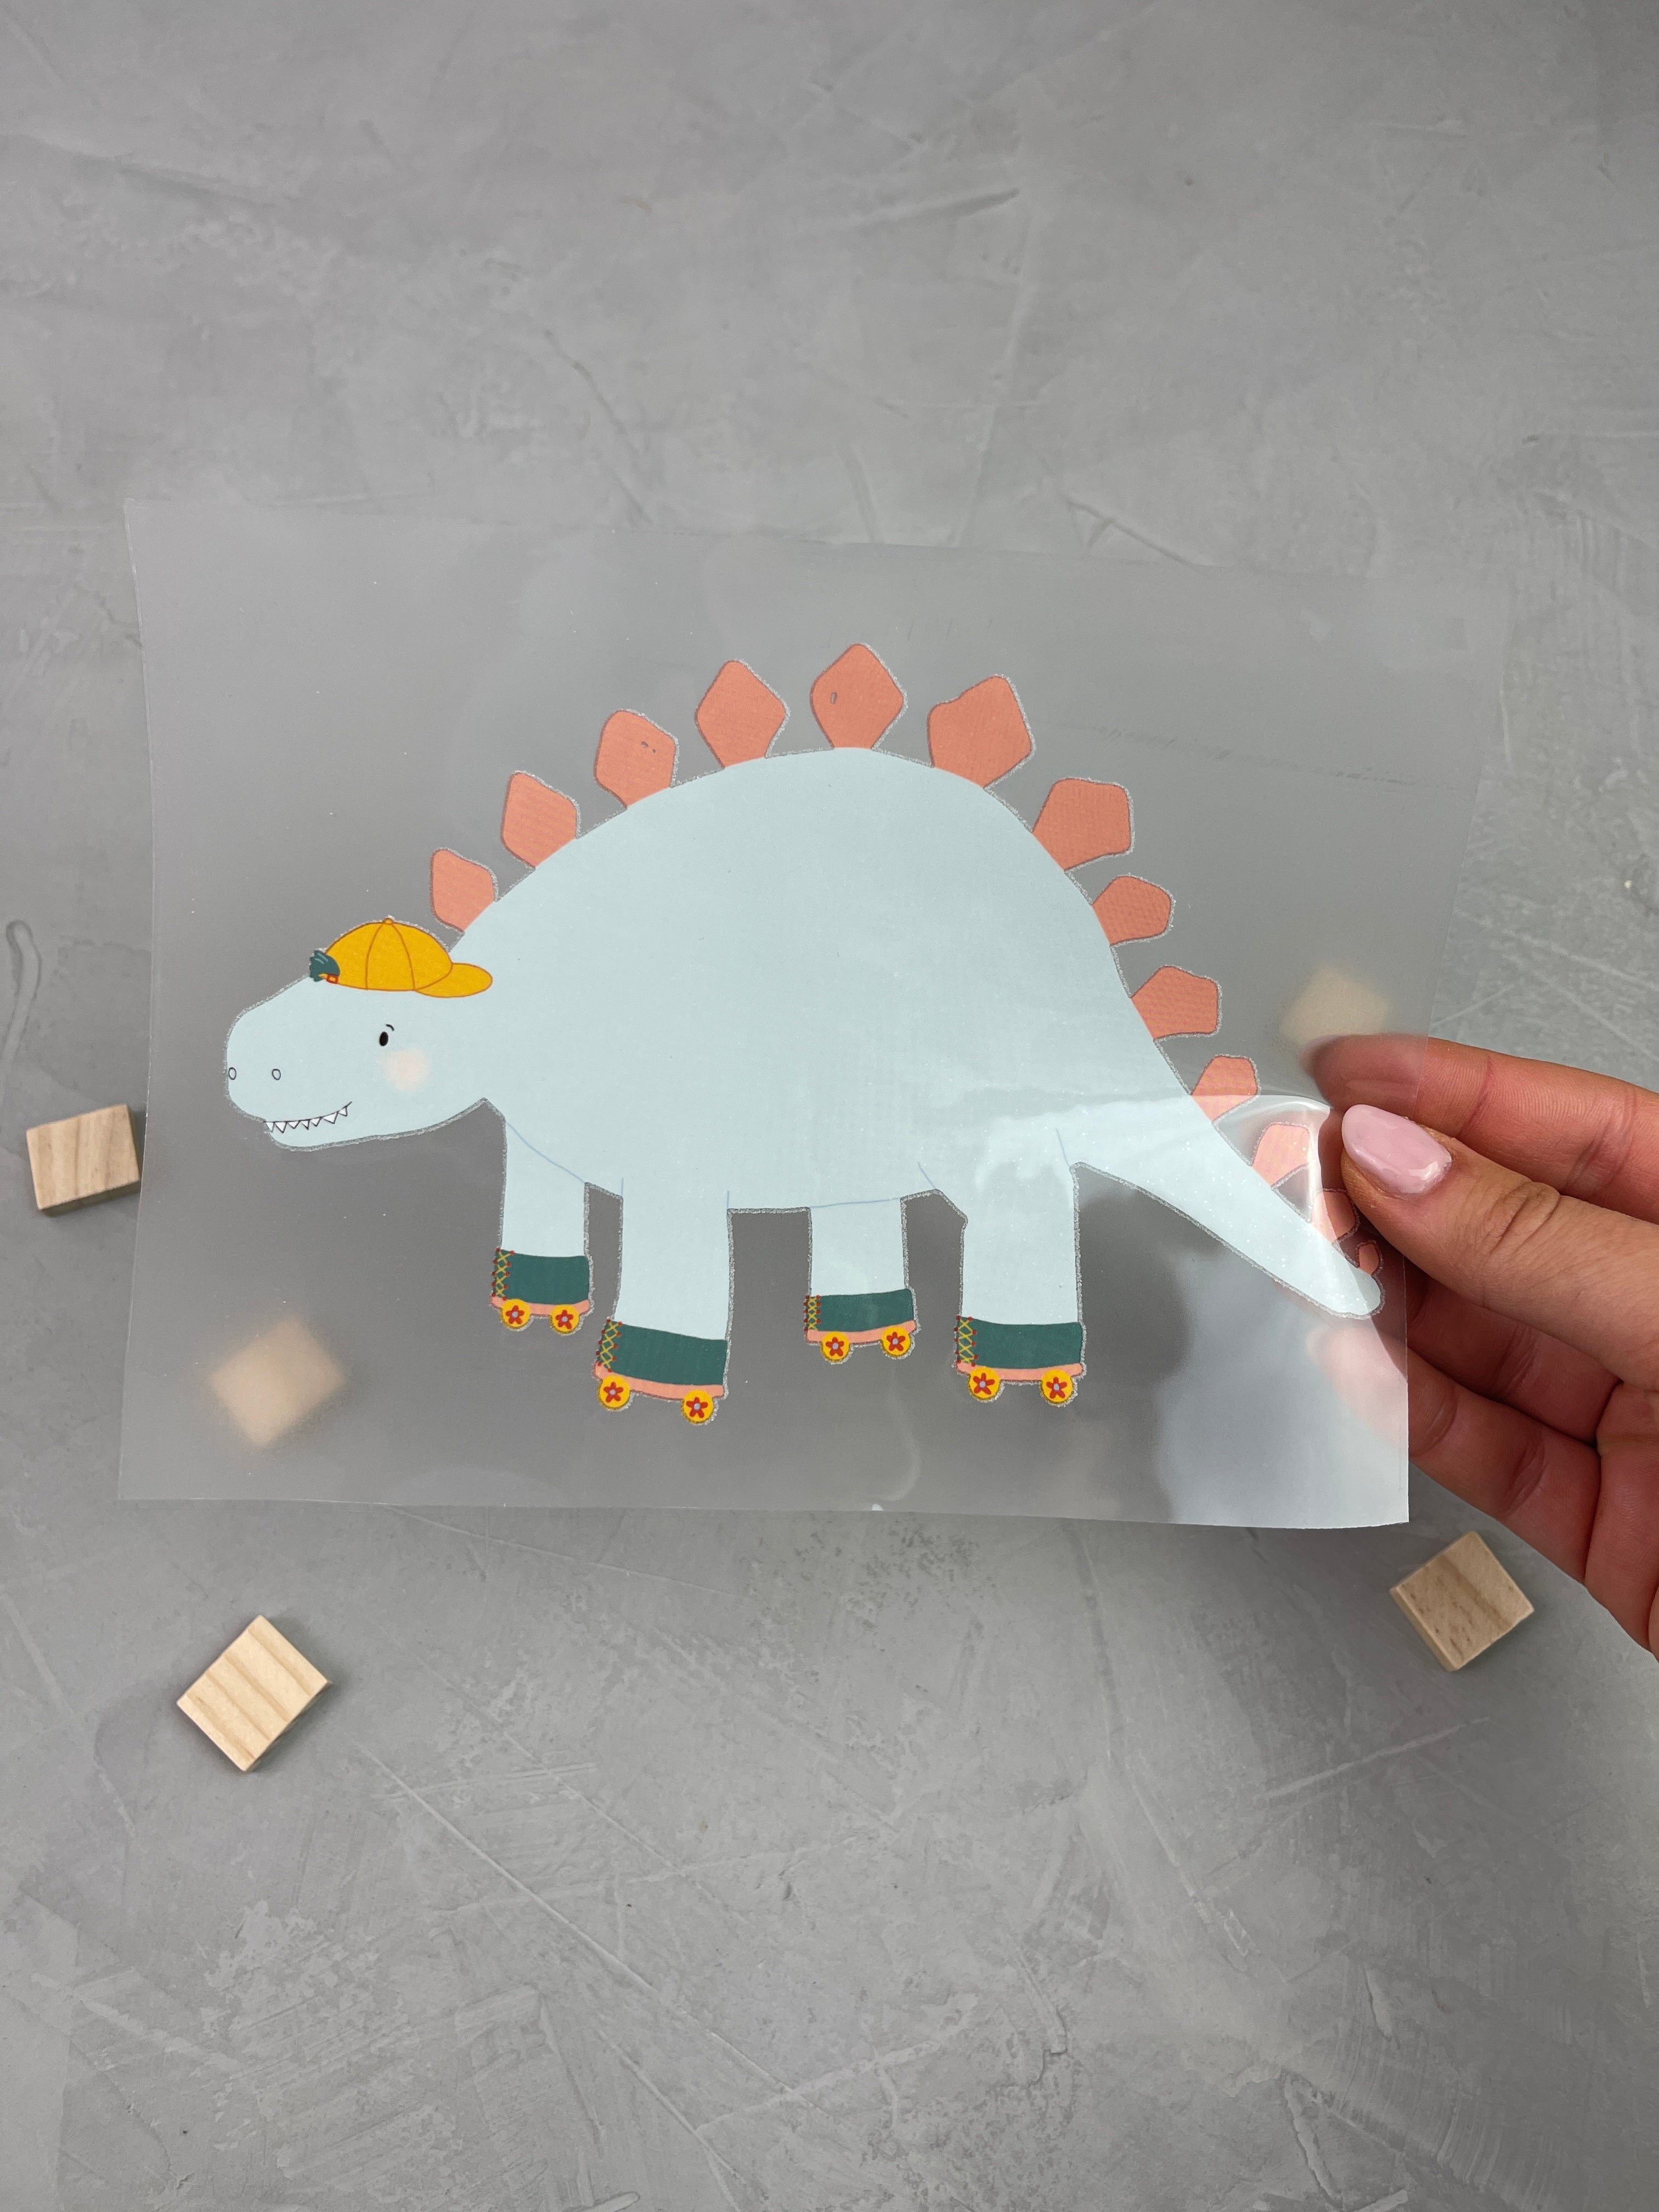 großes Bügelbild - die Urknallgang (Stegosaurus)